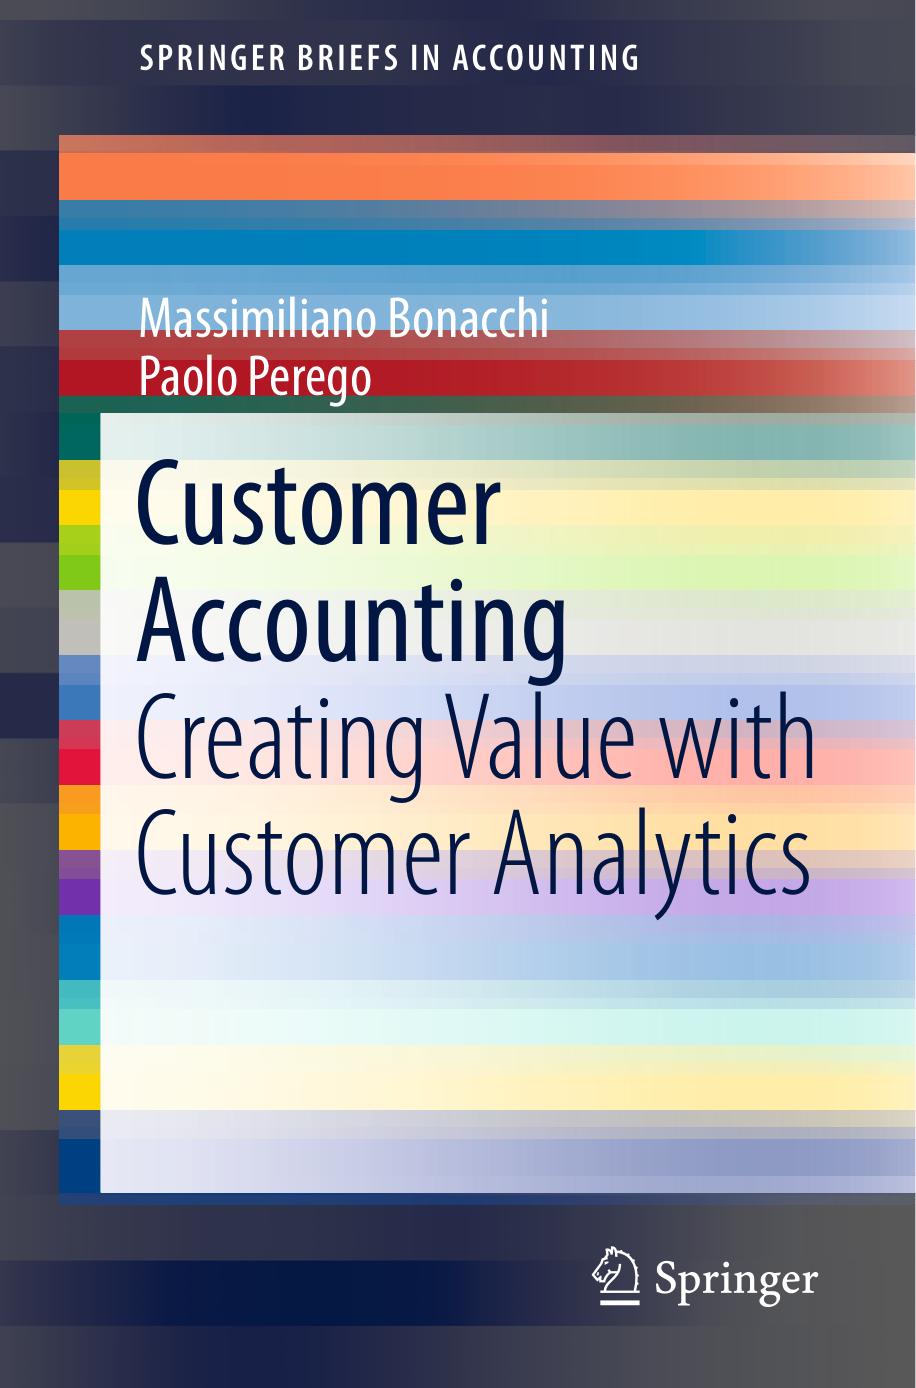 Customer Accounting Creating Value with Customer Analytics by Massimiliano Bonacchi, Paolo Perego (z-lib.org) 2019